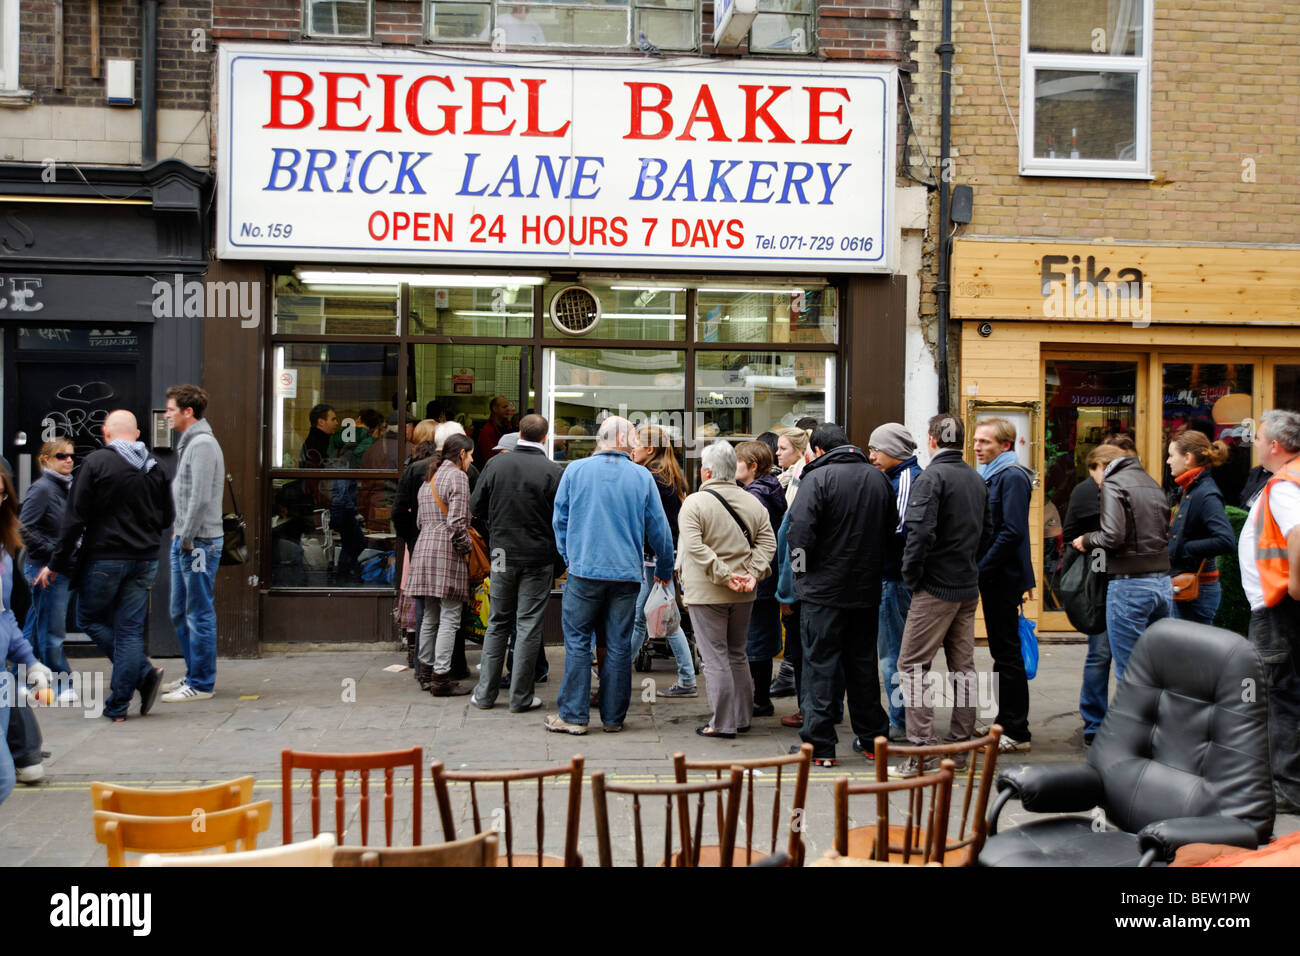 People queuing at the popular Beigel Bake bakery on Brick Lane. London. Britain. UK Stock Photo